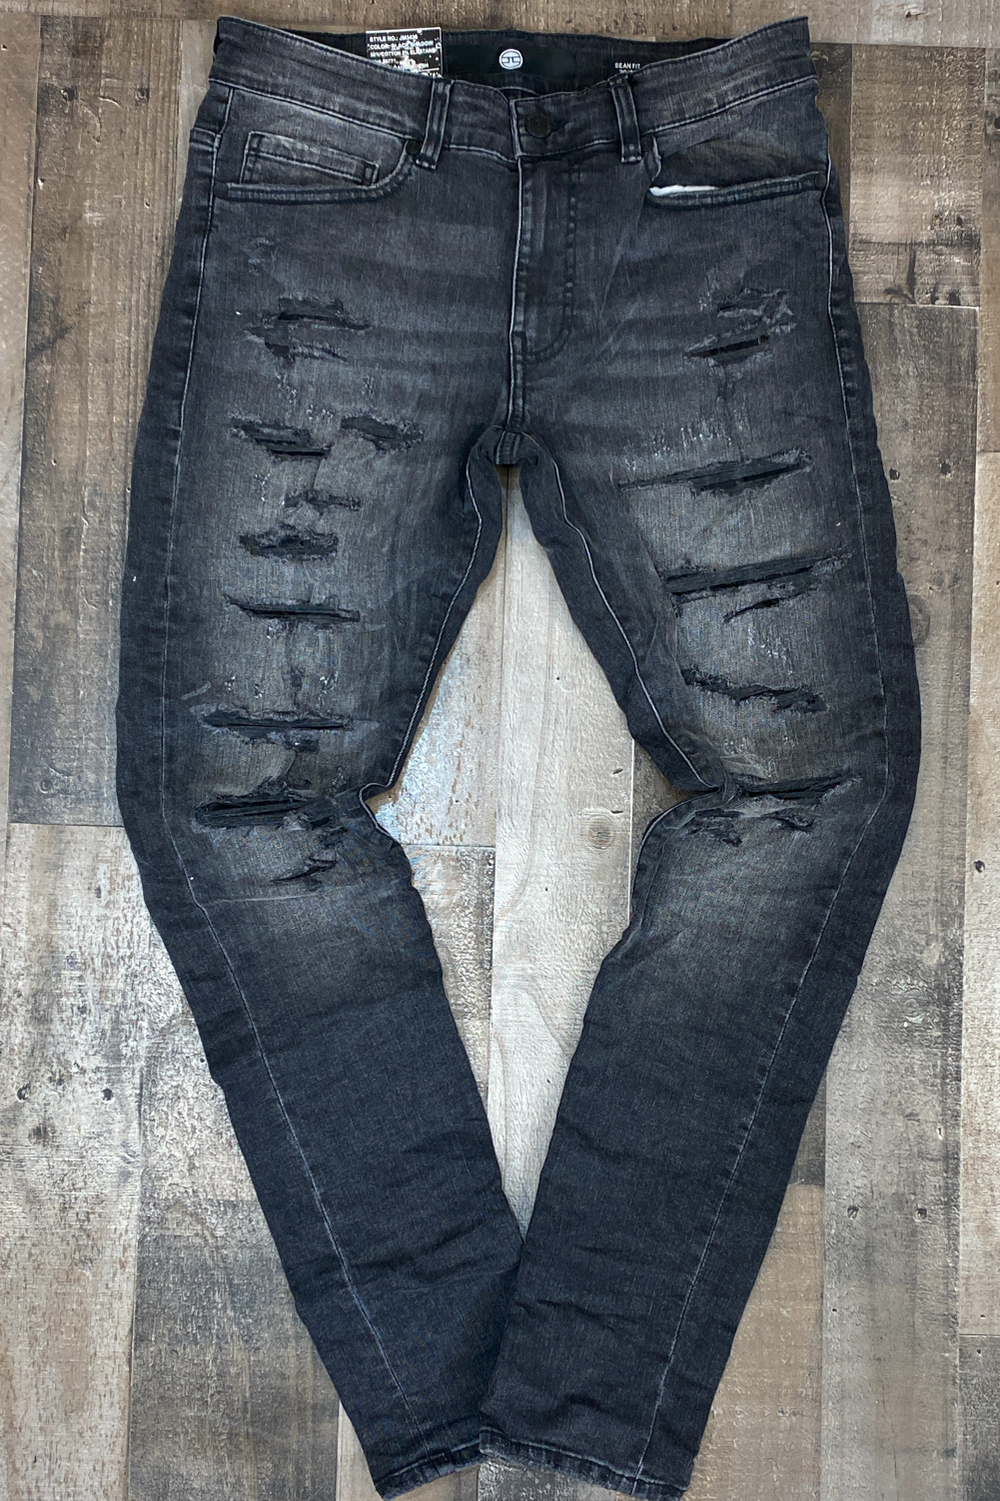 Jordan Craig- crinkled denim jeans w shreds (Sean fit)